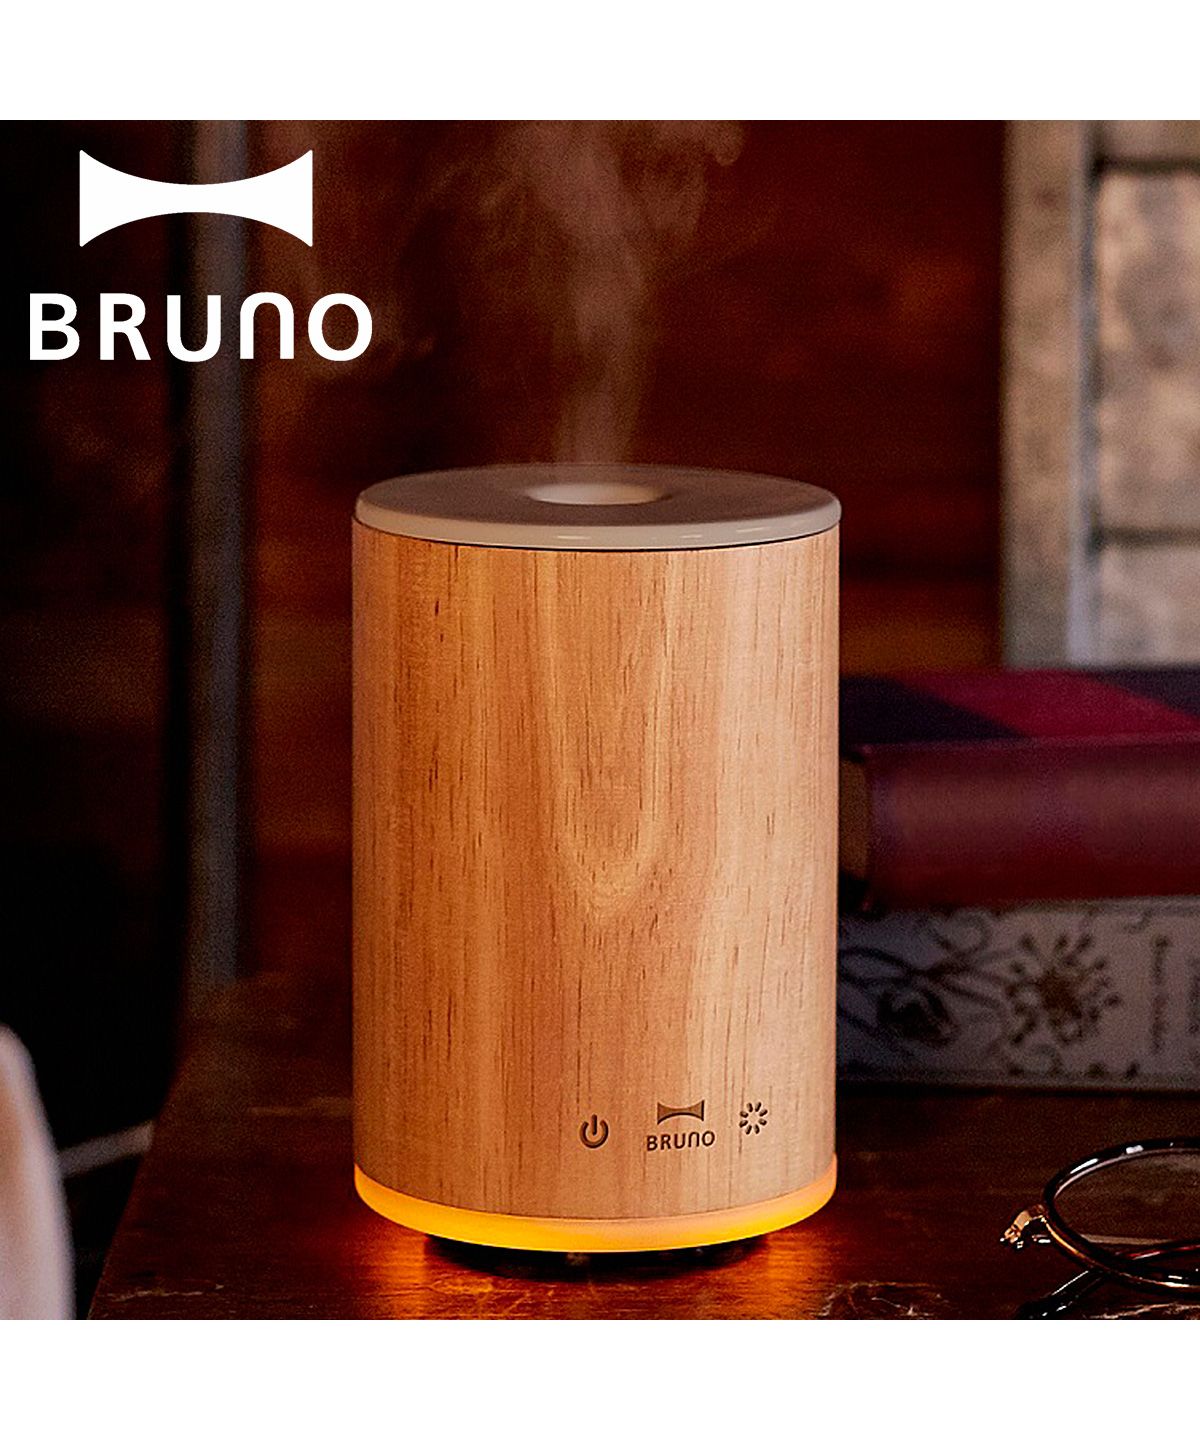 BRUNO ブルーノ 加湿器 超音波式 アロマオイル ディフューザー ウッドアロマミスト 一人暮らし リビング 寝室 小型 コンパクト 家電  ナチュラルウッド